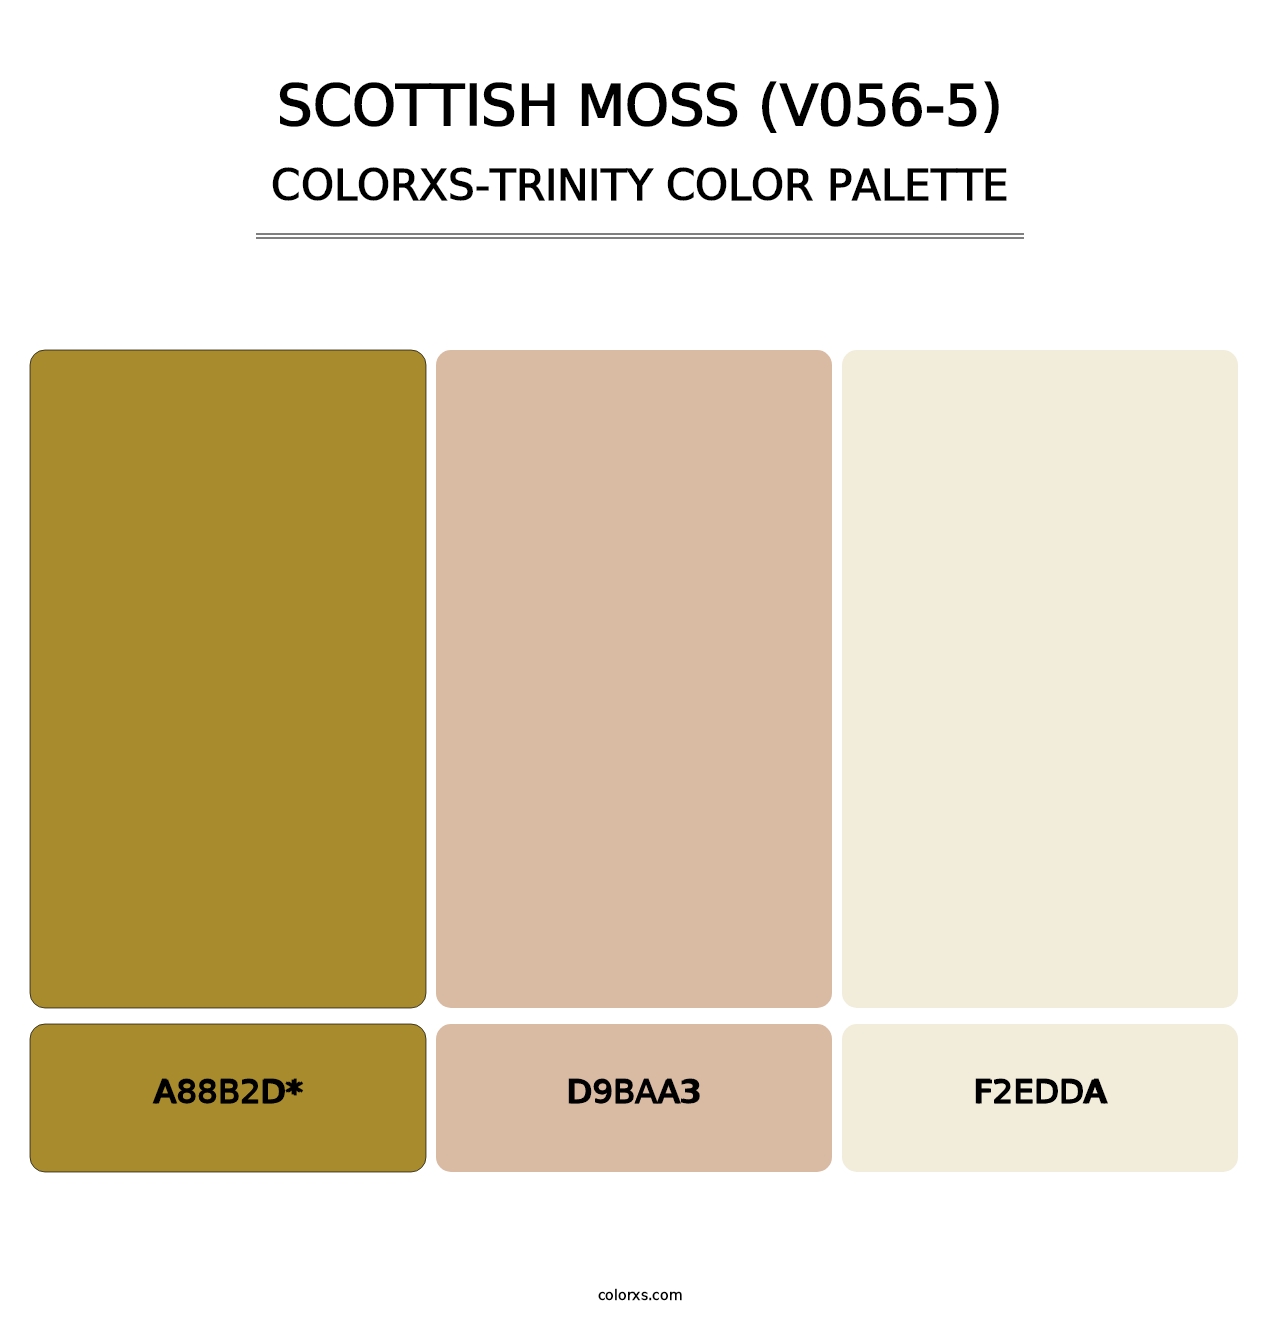 Scottish Moss (V056-5) - Colorxs Trinity Palette